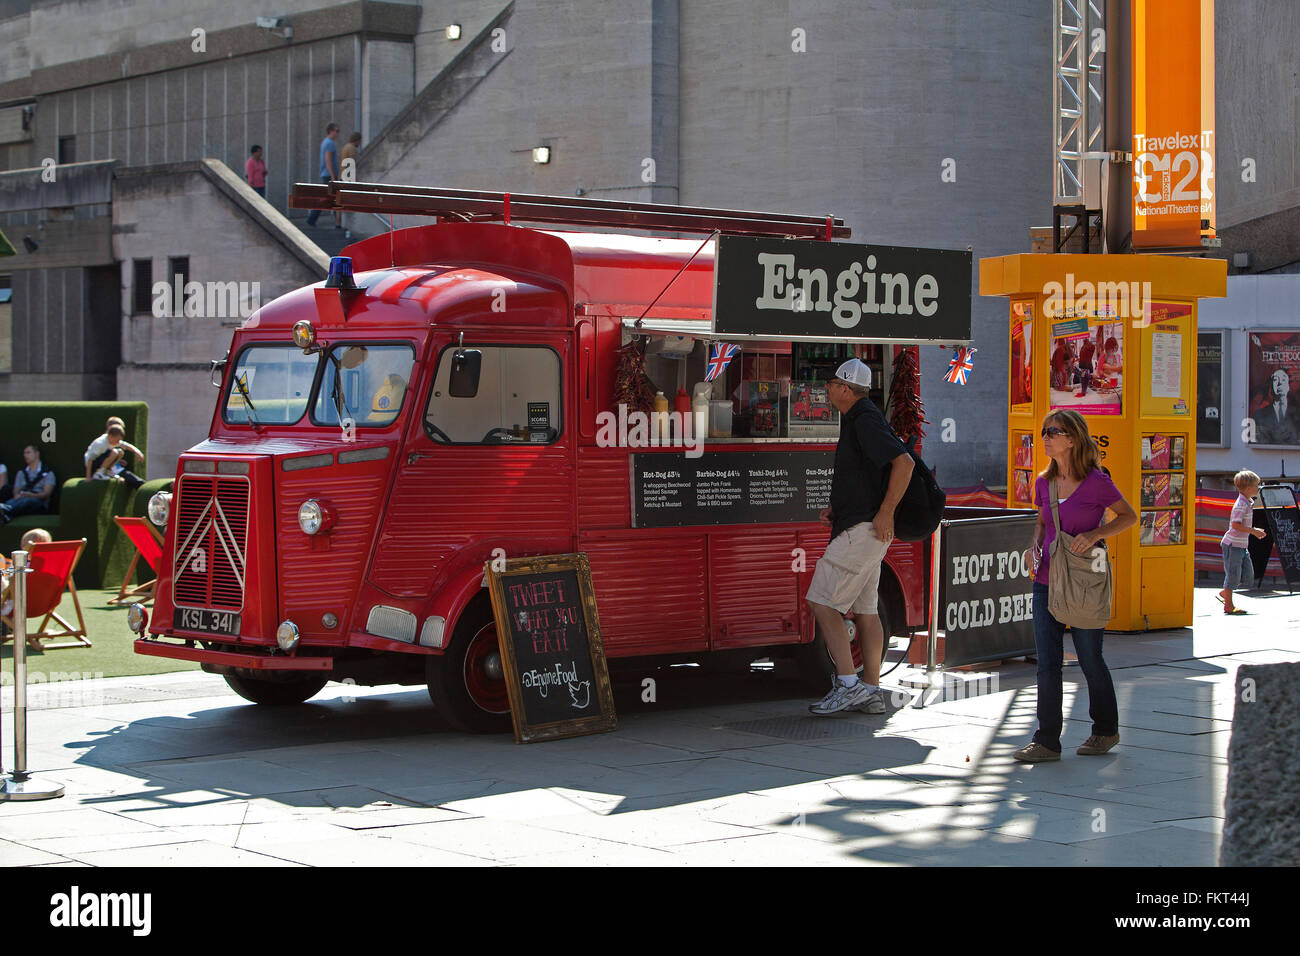 London street food vans: Engine,1959 Citroen H fire engine van converted  into mobile food stall Stock Photo - Alamy